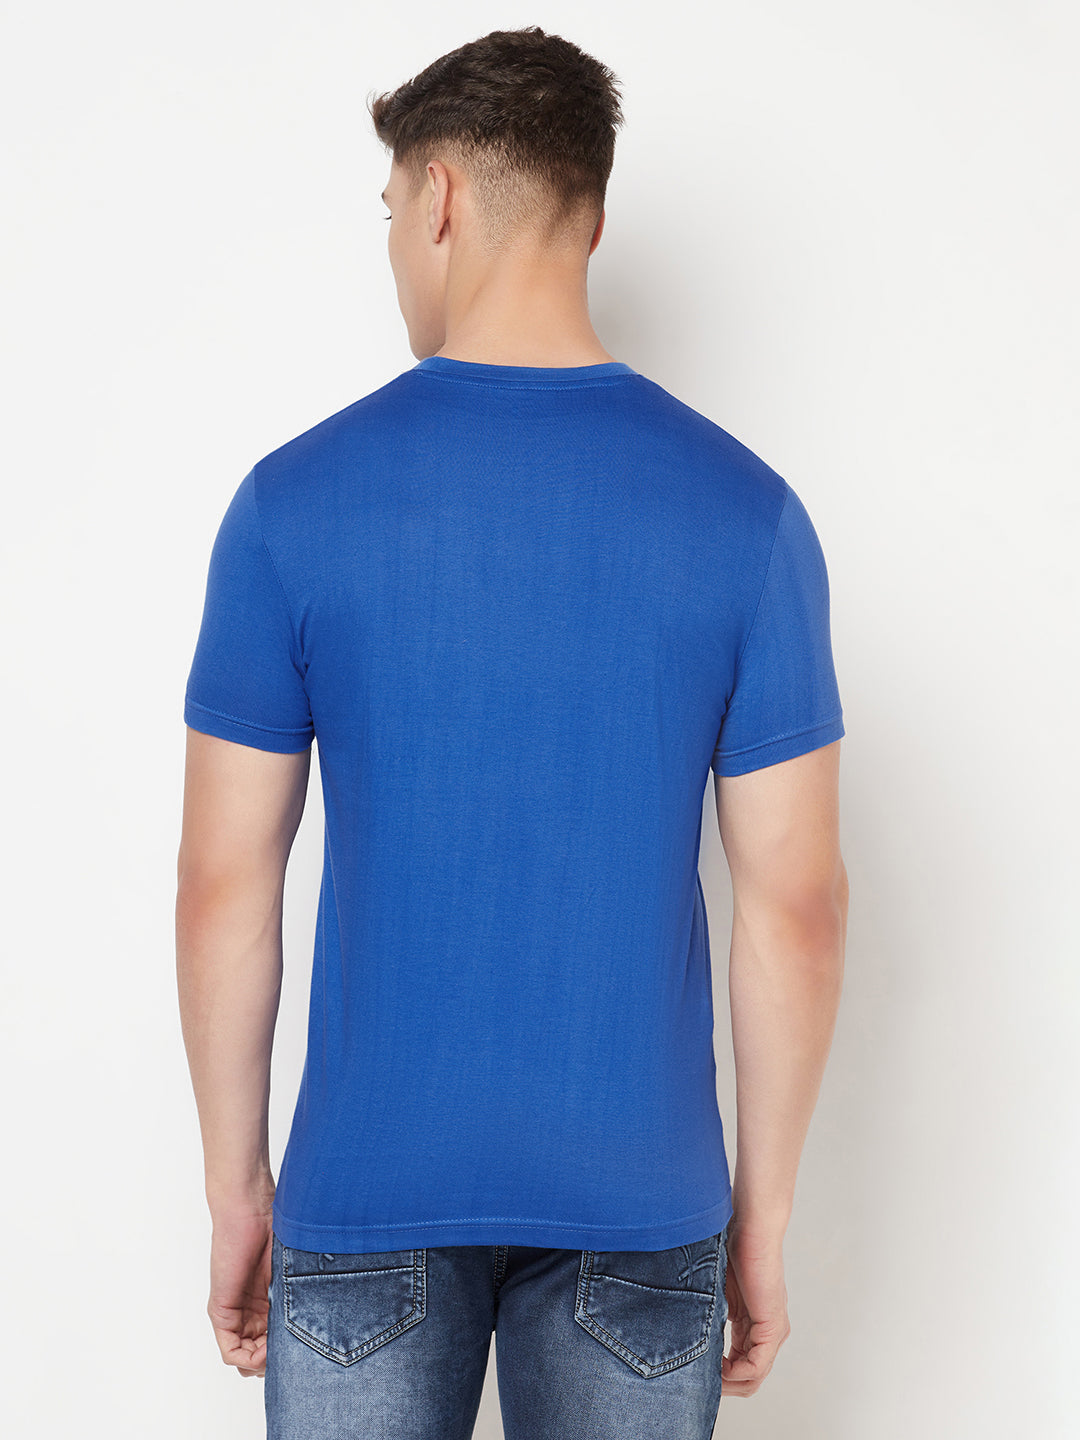 Premium Cotton Tshirts  (Pack of 2- Maroon,Blue)